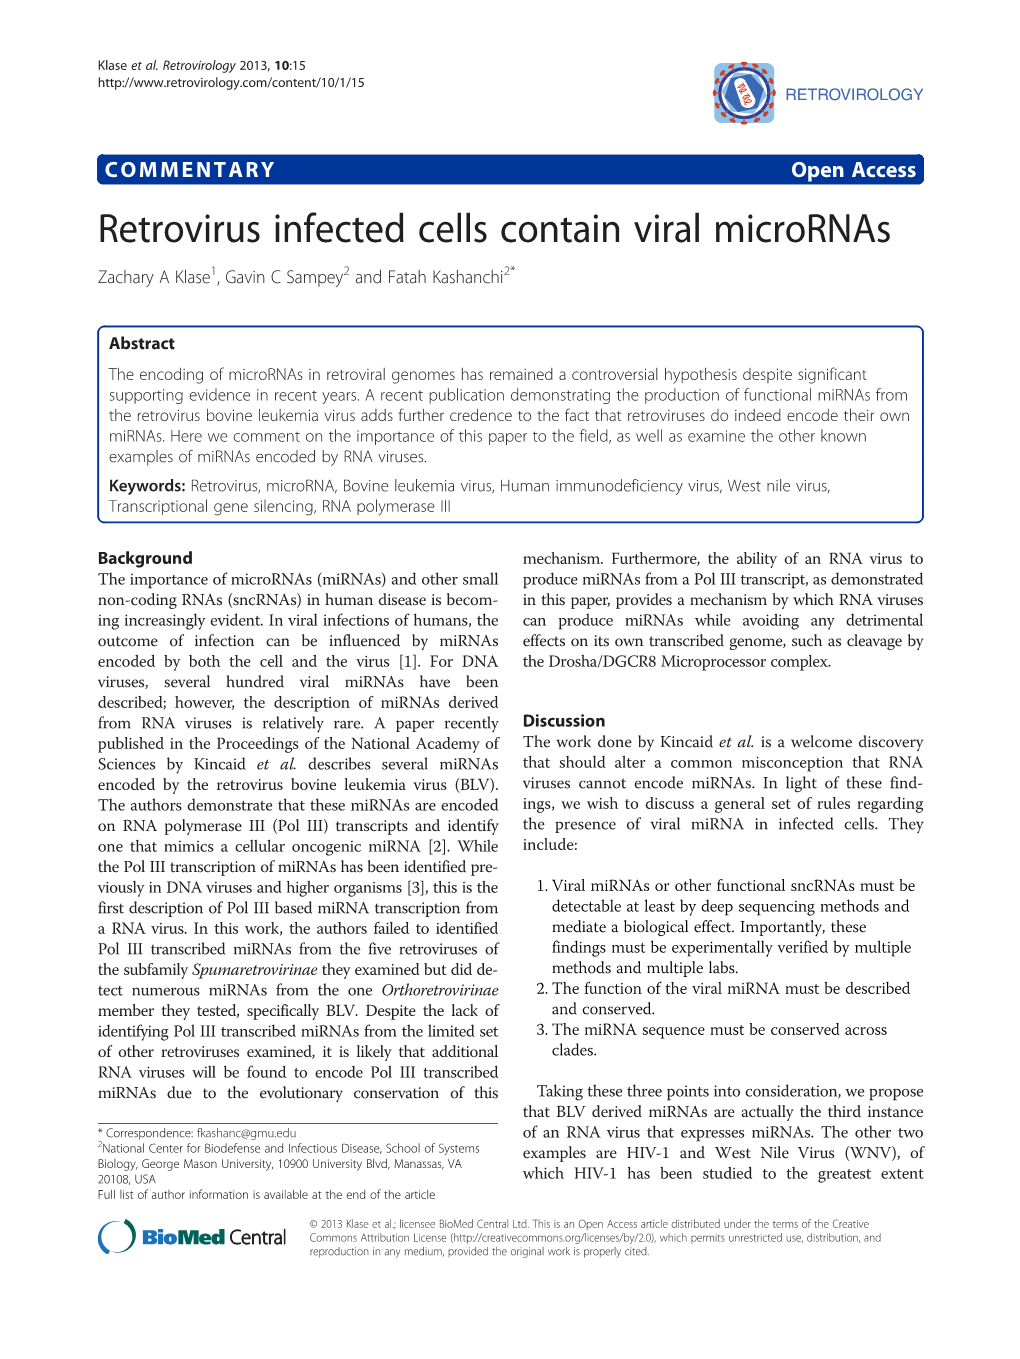 Retrovirus Infected Cells Contain Viral Micrornas Zachary a Klase1, Gavin C Sampey2 and Fatah Kashanchi2*